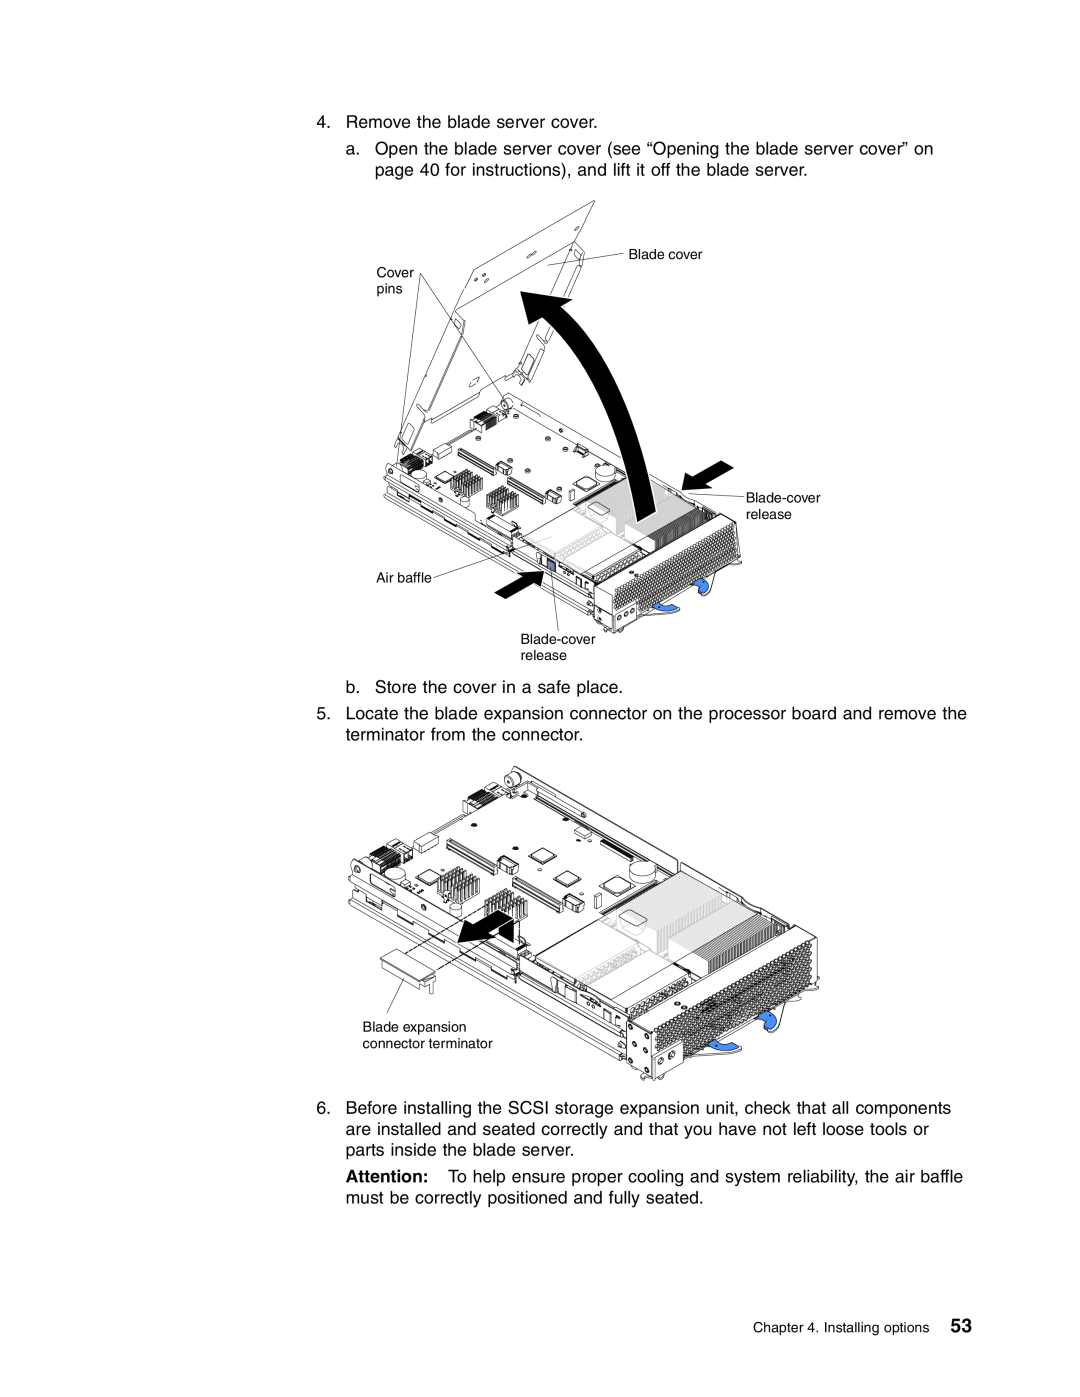 IBM HS40 manual Remove the blade server cover 